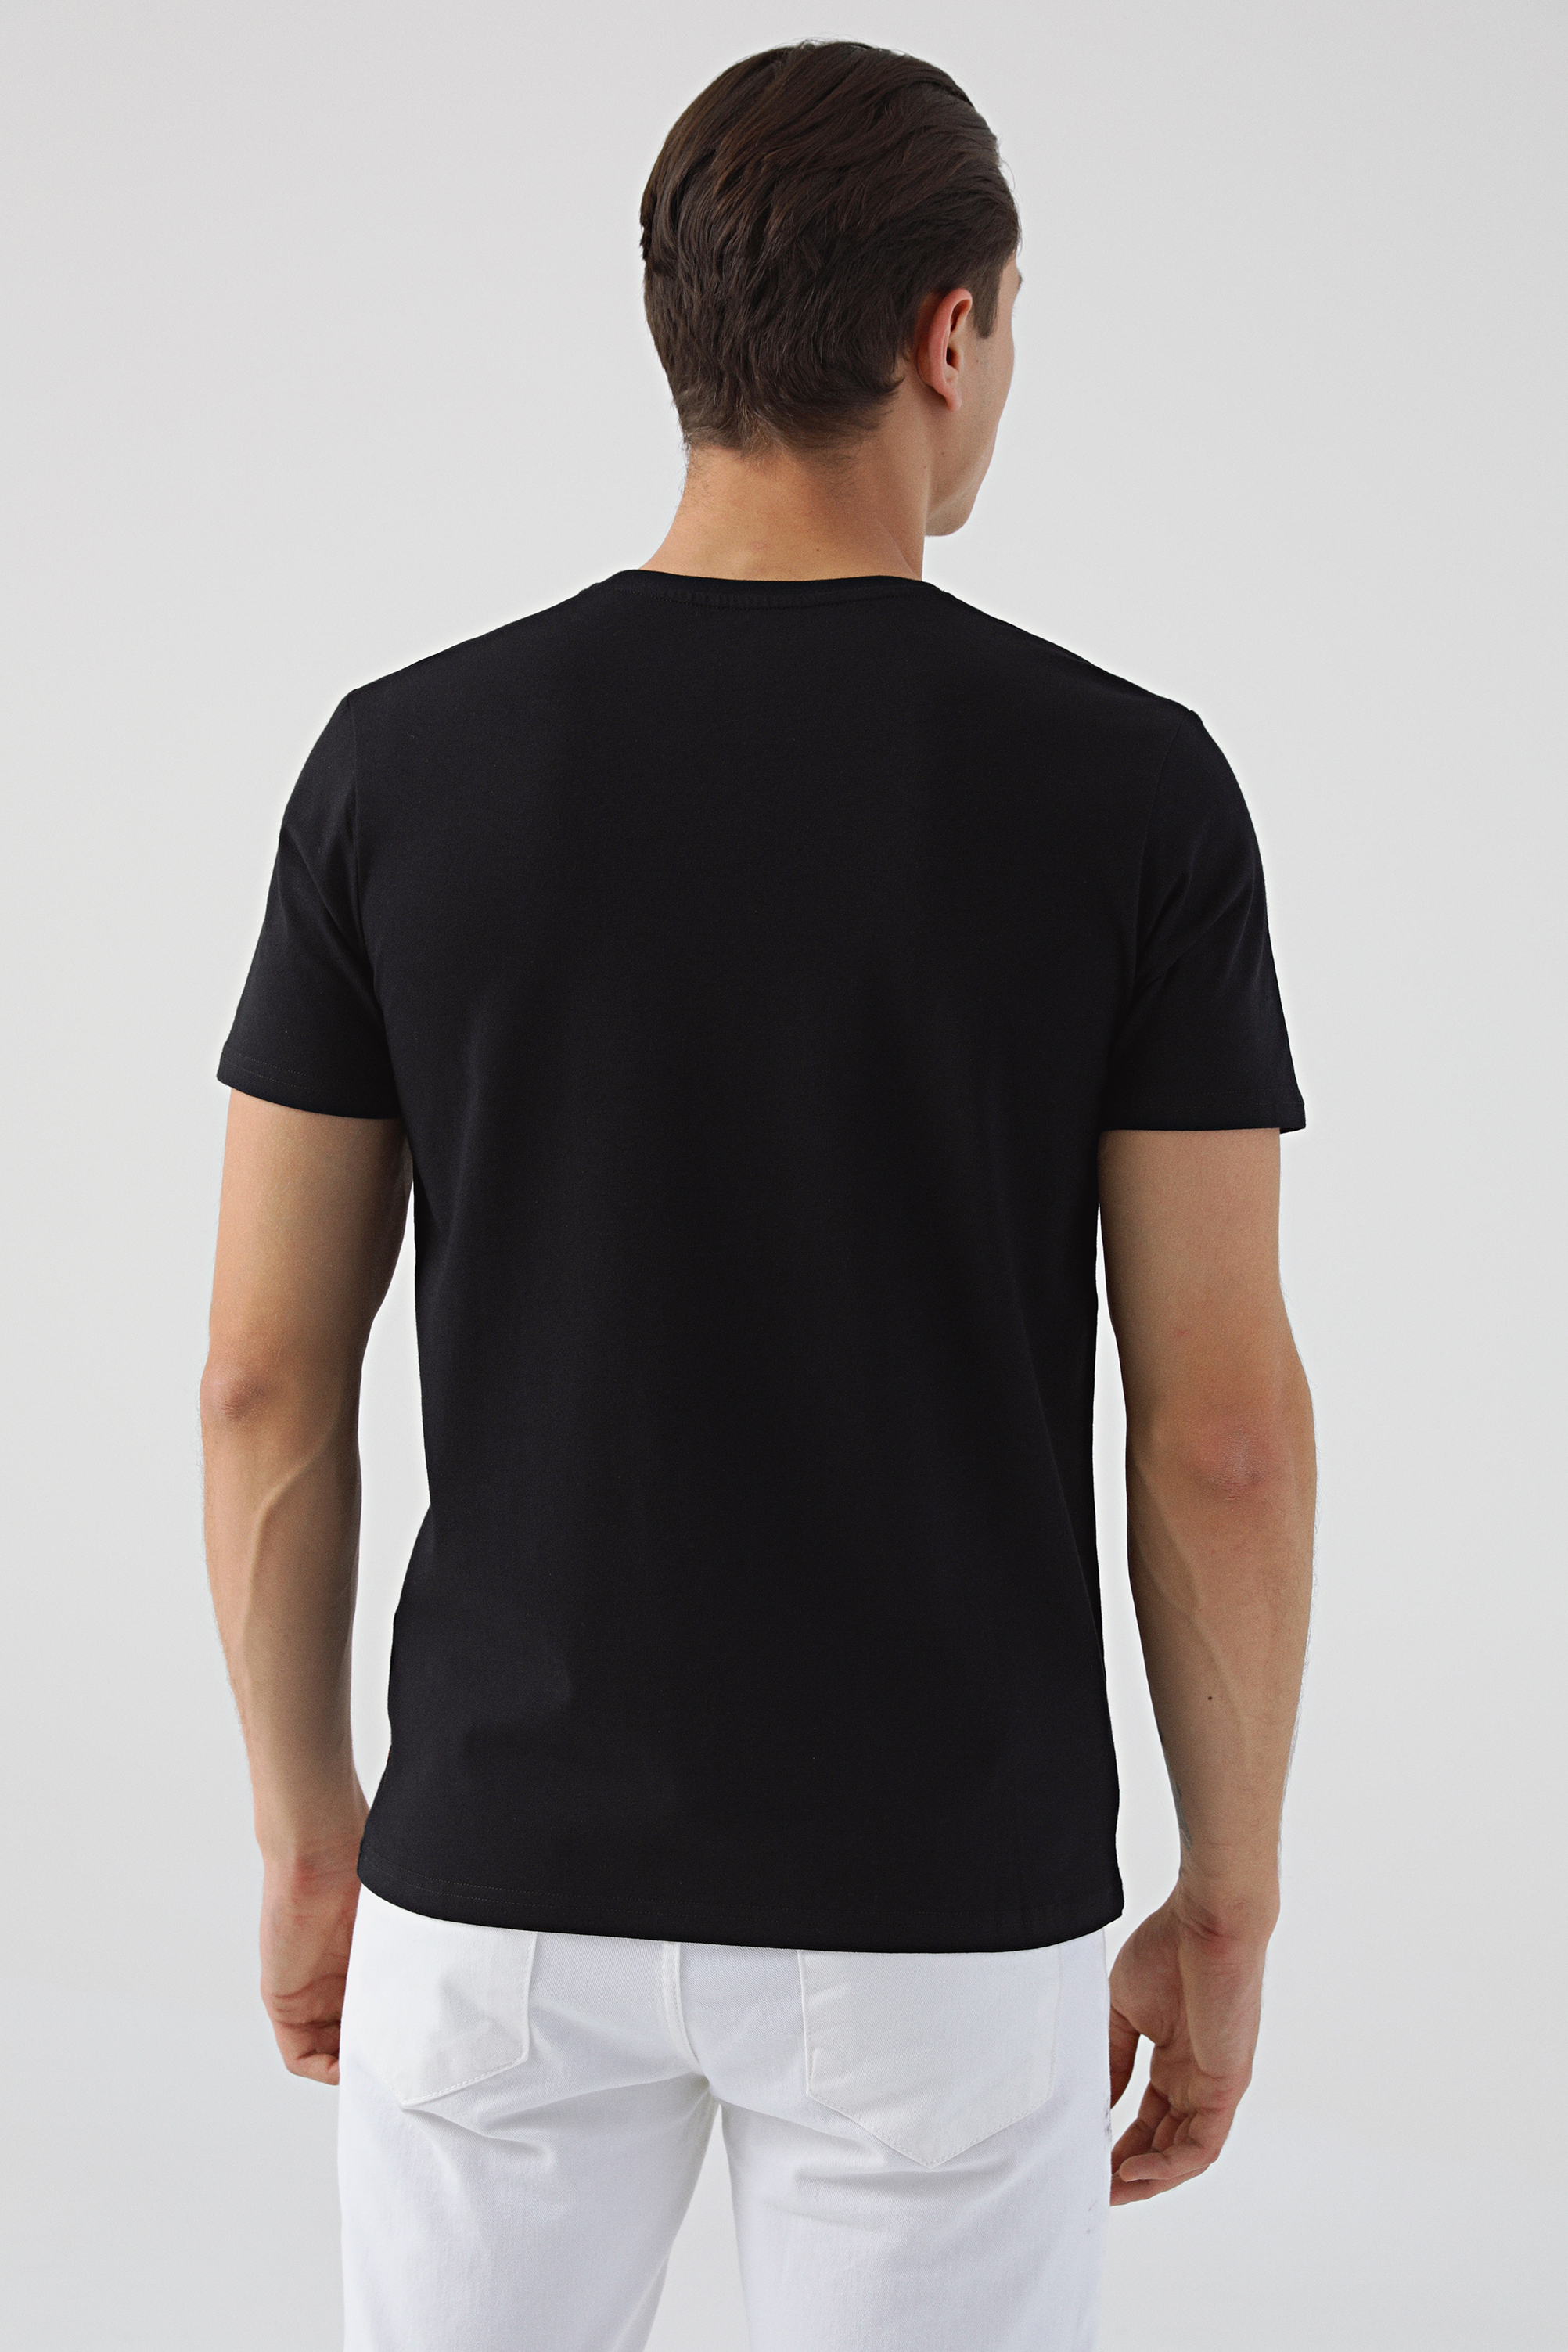 Damat Tween Tween Siyah T-shirt. 4